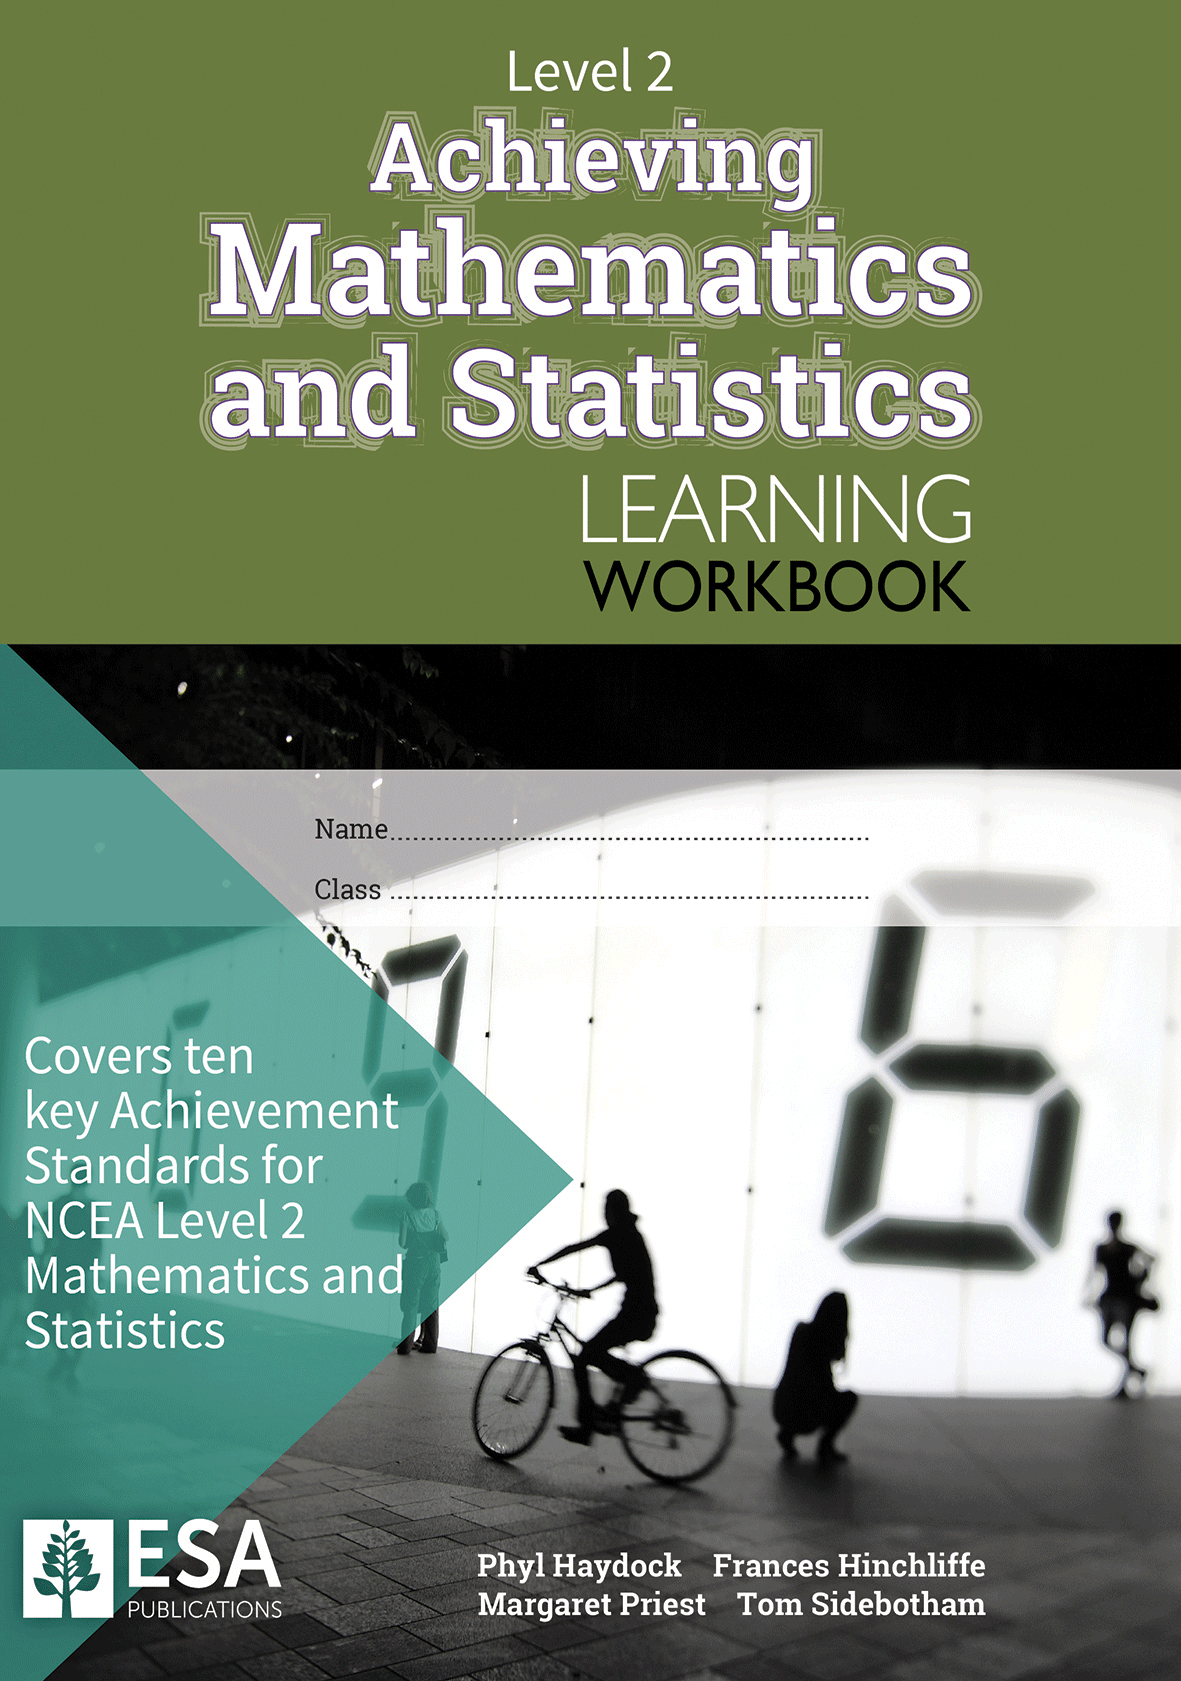 Level 2 Achieving Mathematics and Statistics Learning Workbook